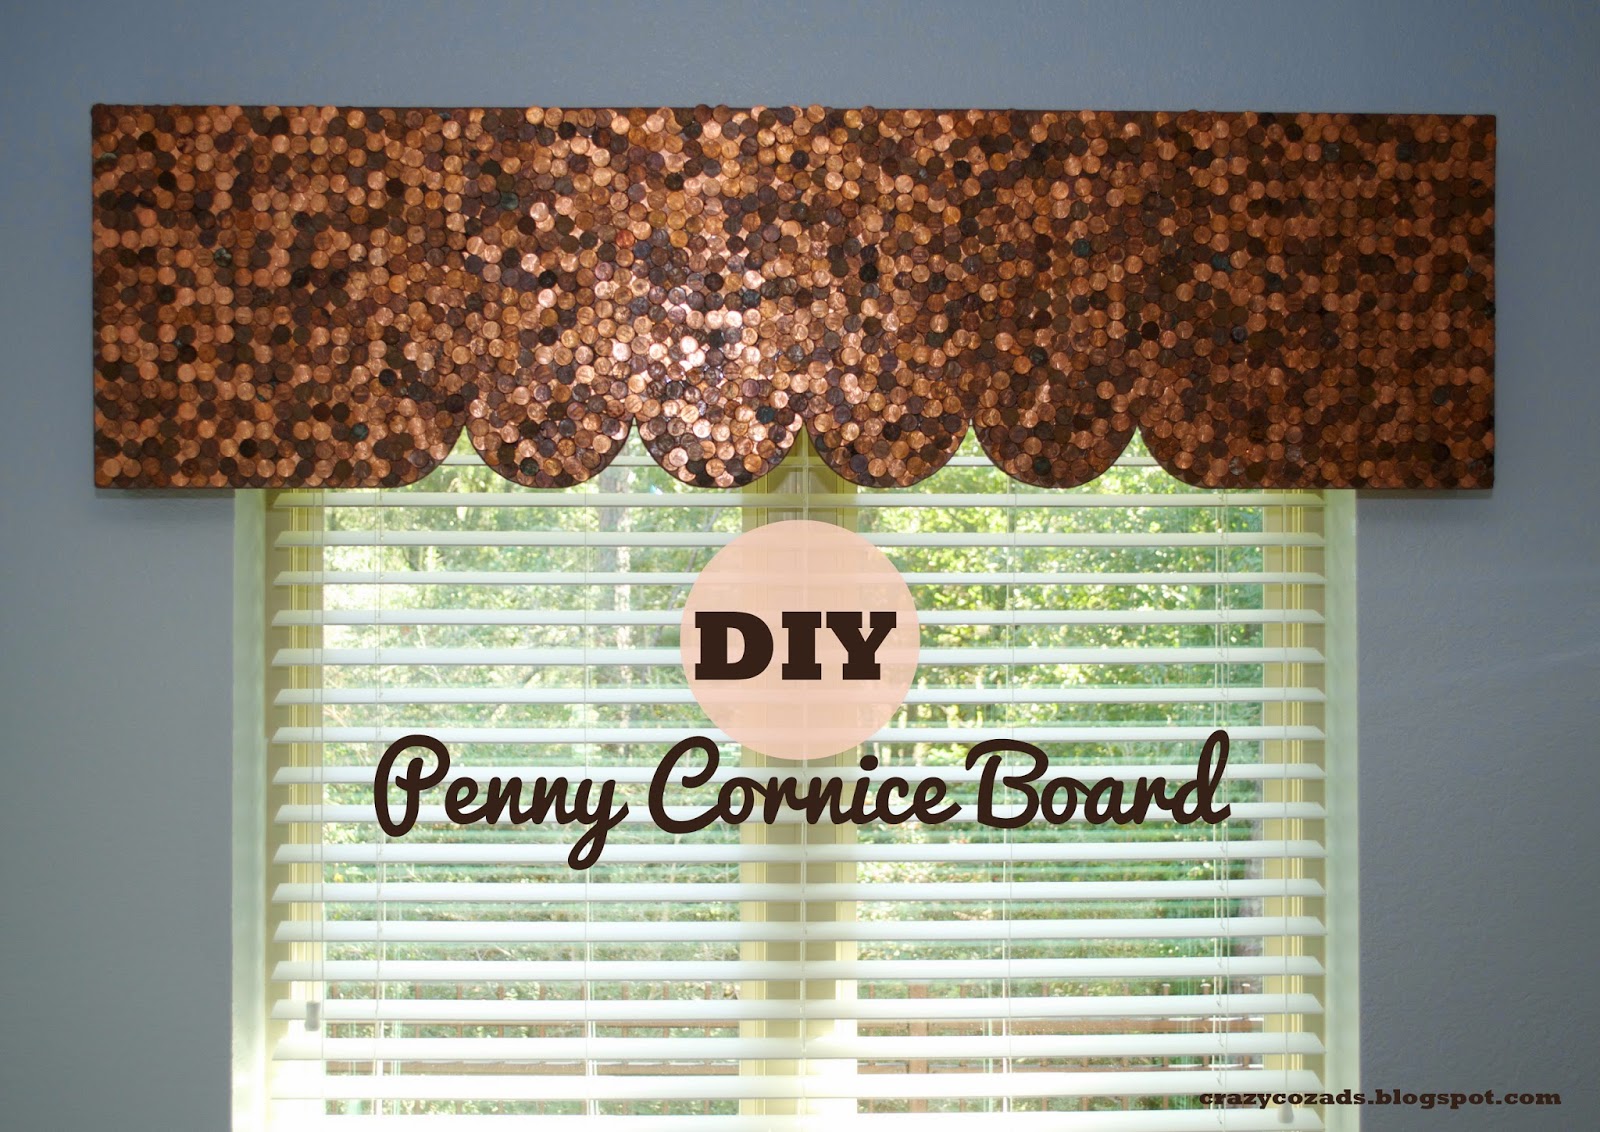 Crazy Cozads Diy Penny Cornice Board Window Treatment